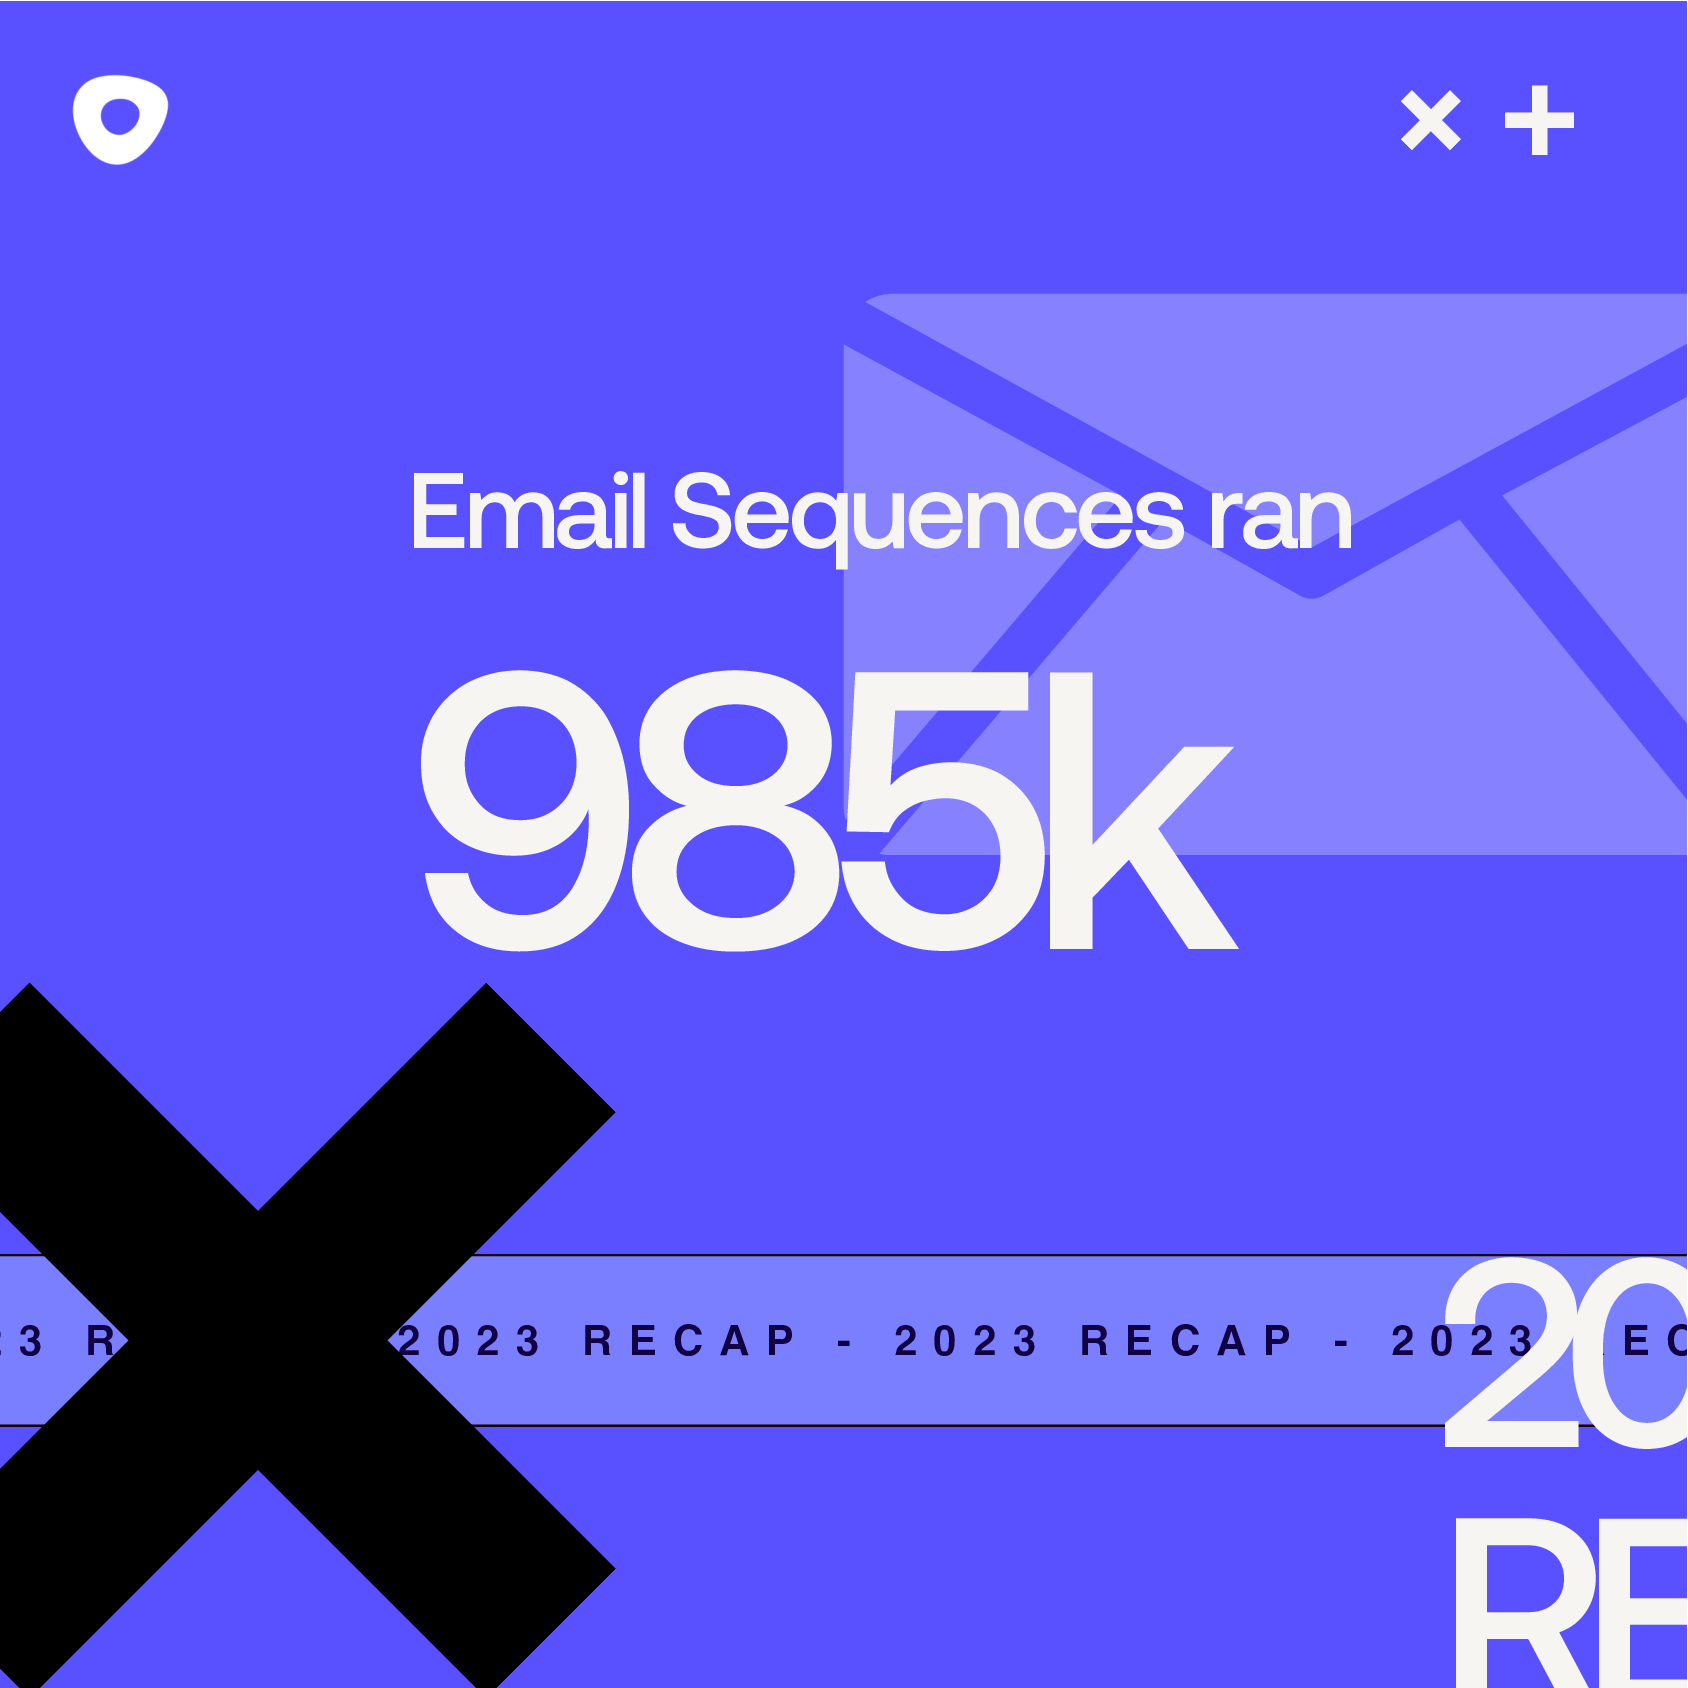 Outreach 2023 recap 985k email sequences